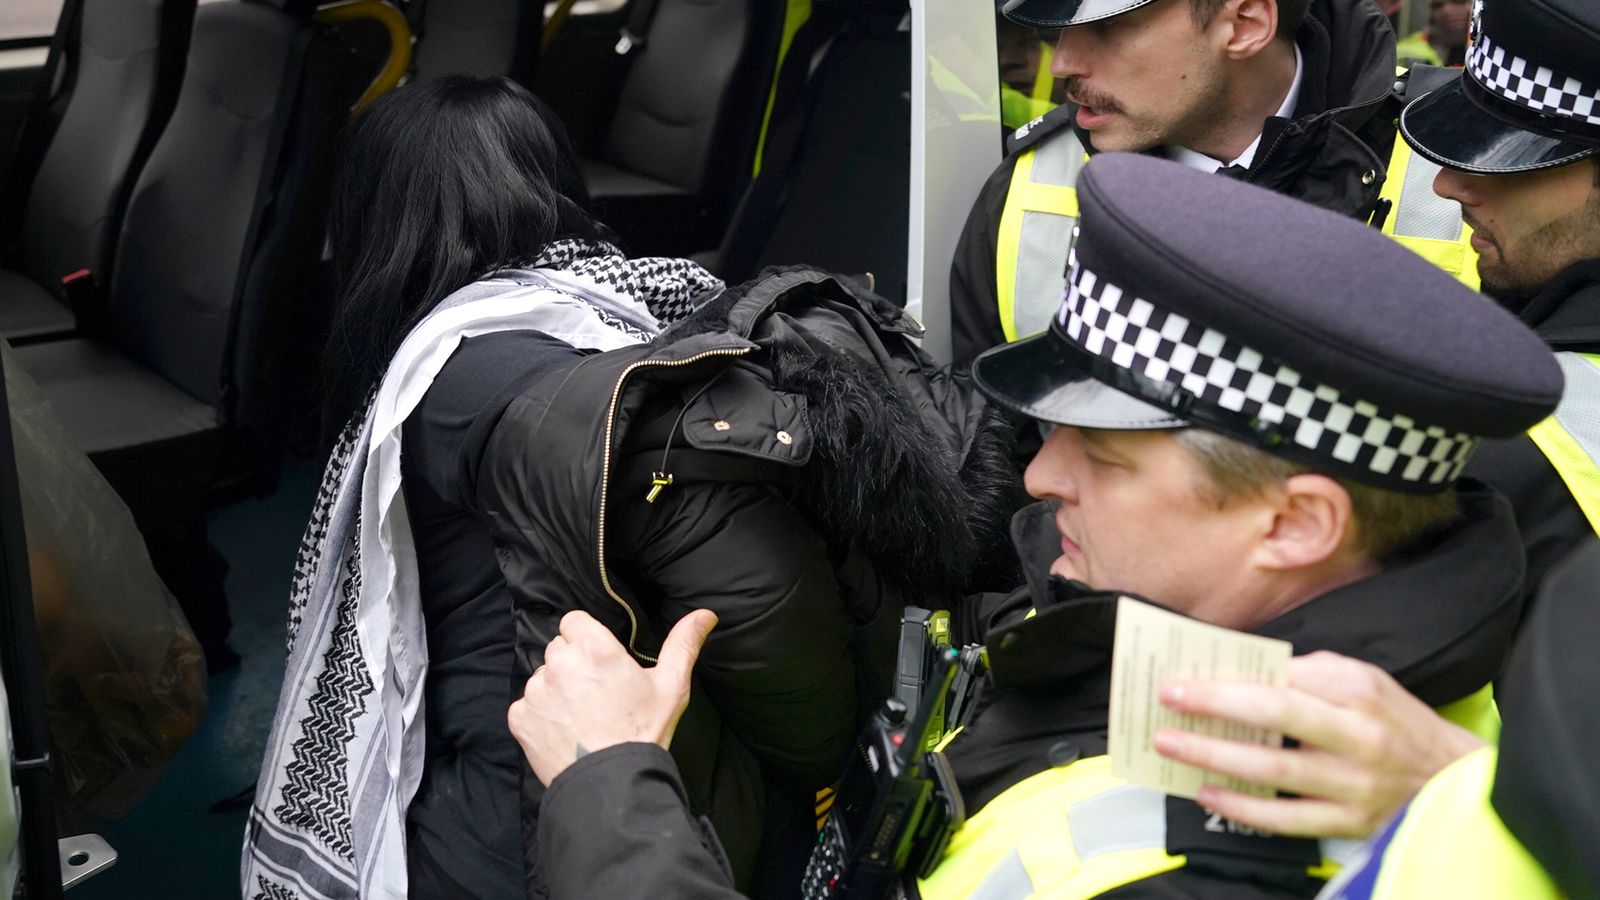 Twelve people arrested at pro-Palestine demonstration in London